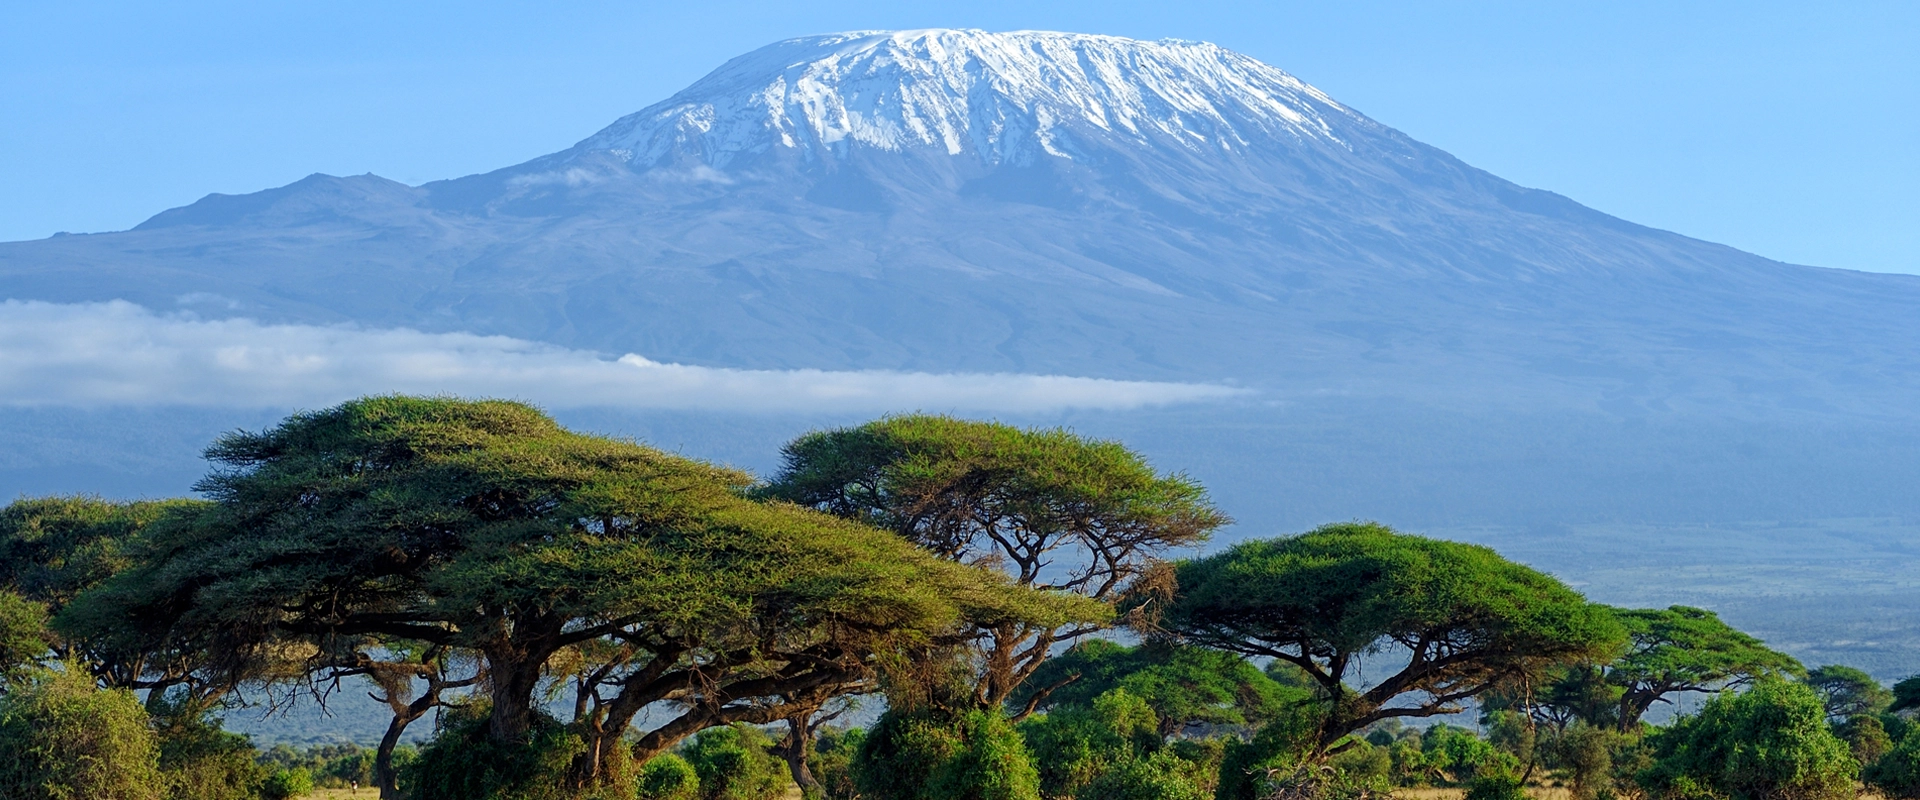 voyage organise tanzanie mont kilimandjaro